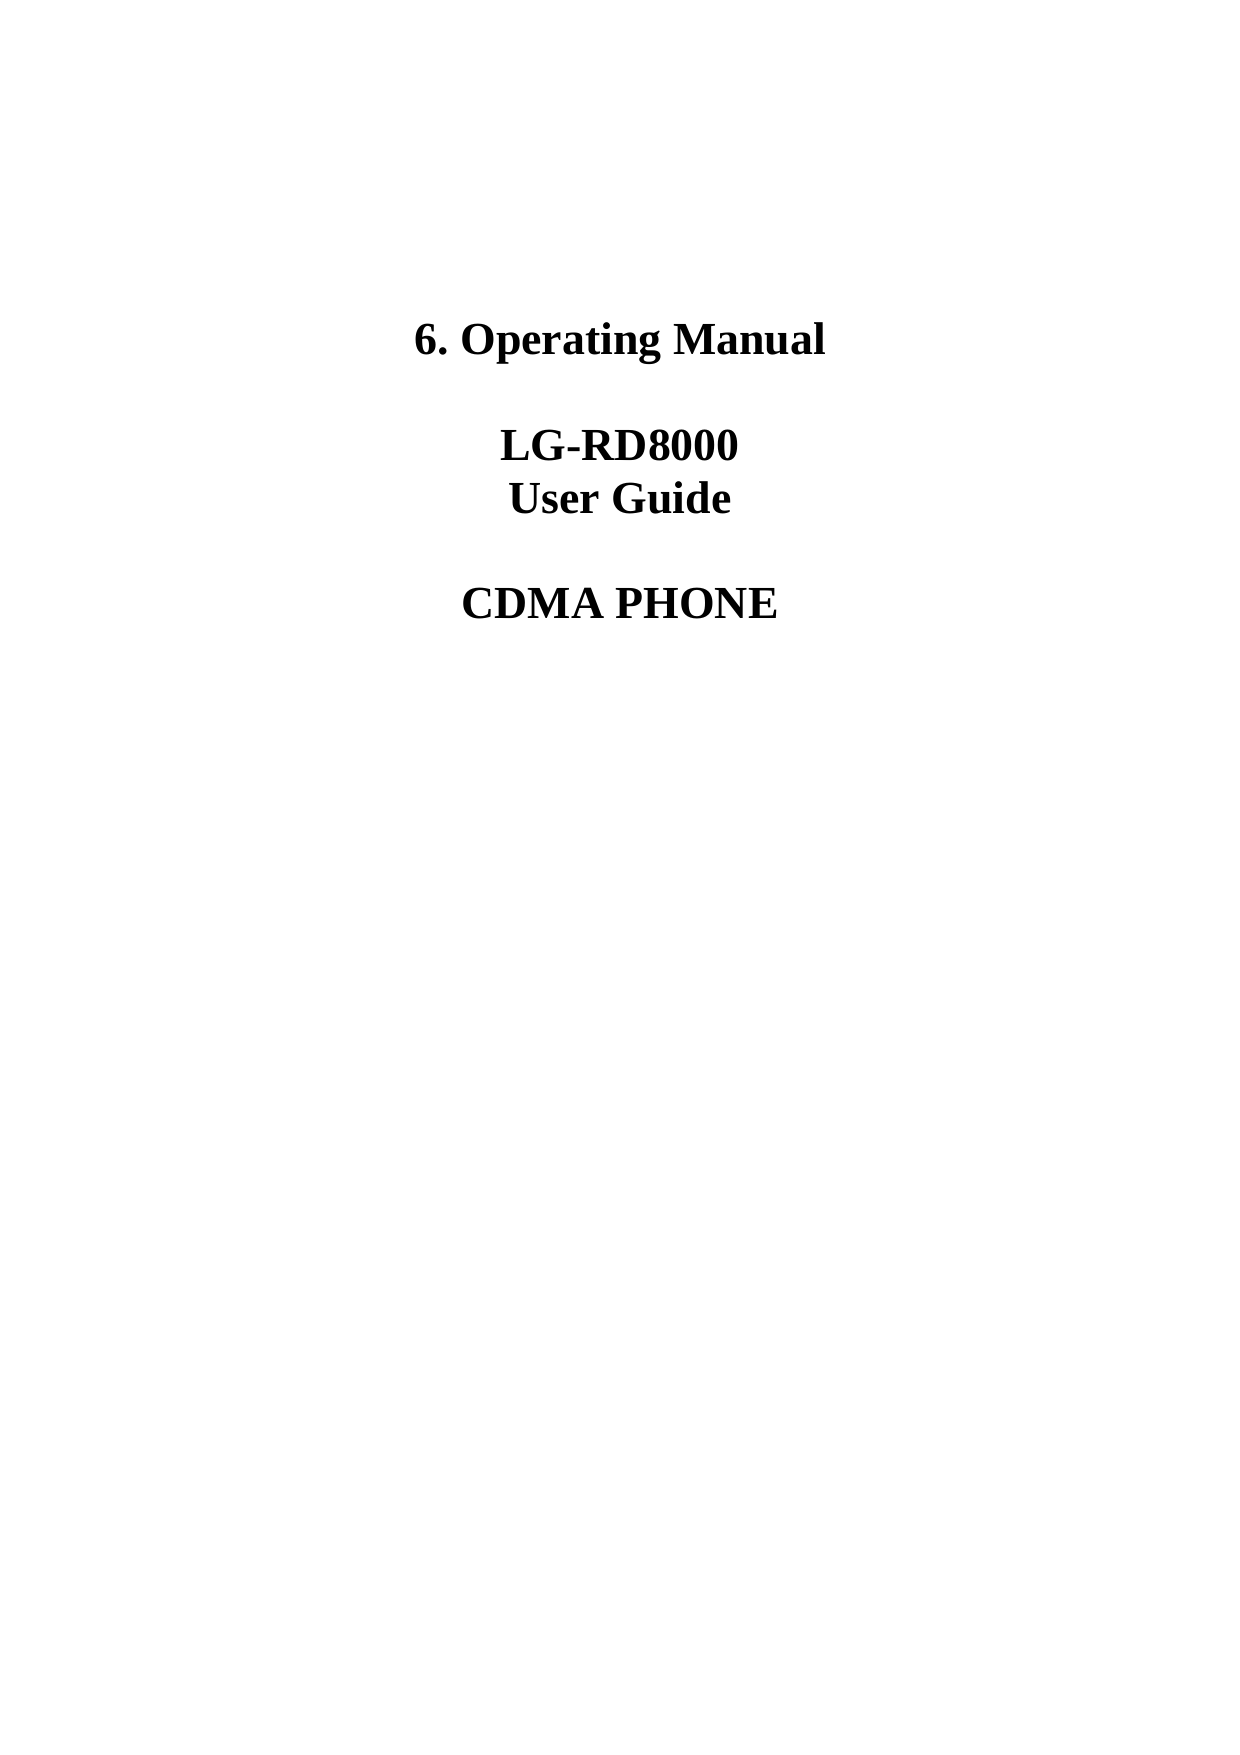   6. Operating Manual  LG-RD8000 User Guide  CDMA PHONE                          